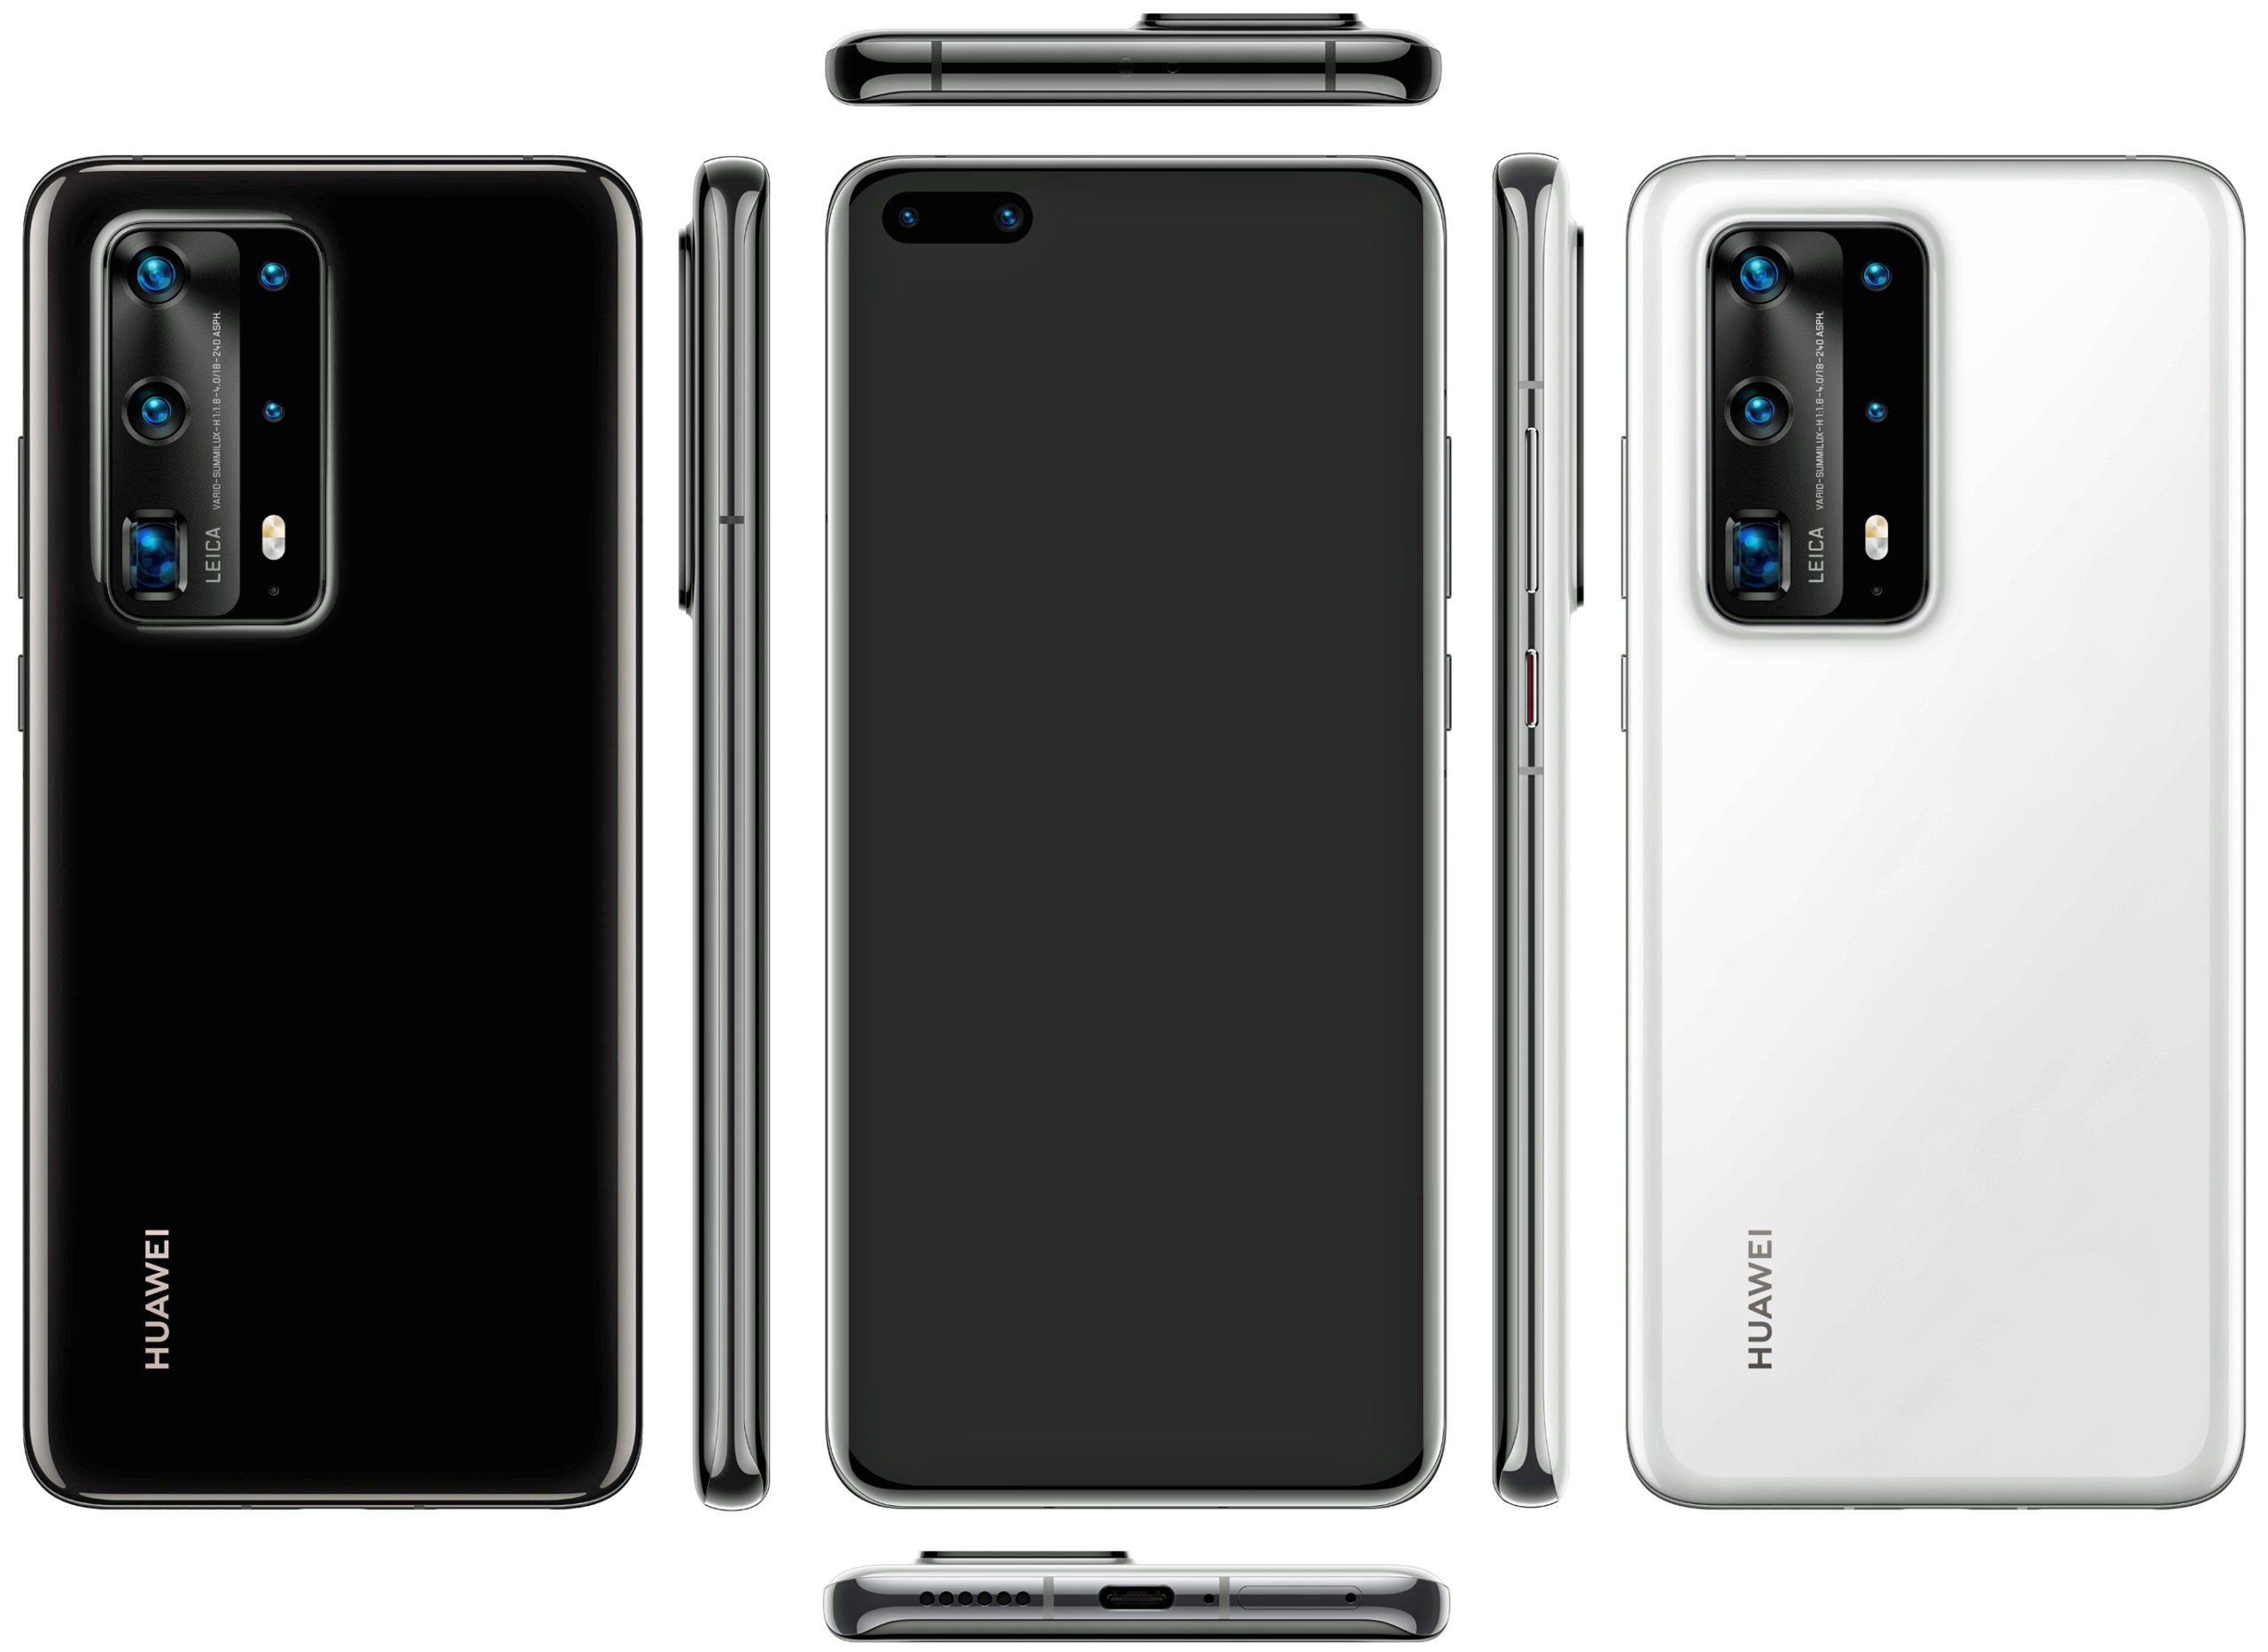 Recenzia smartfónu Huawei P40 Pro Premium s kľúčovými funkciami